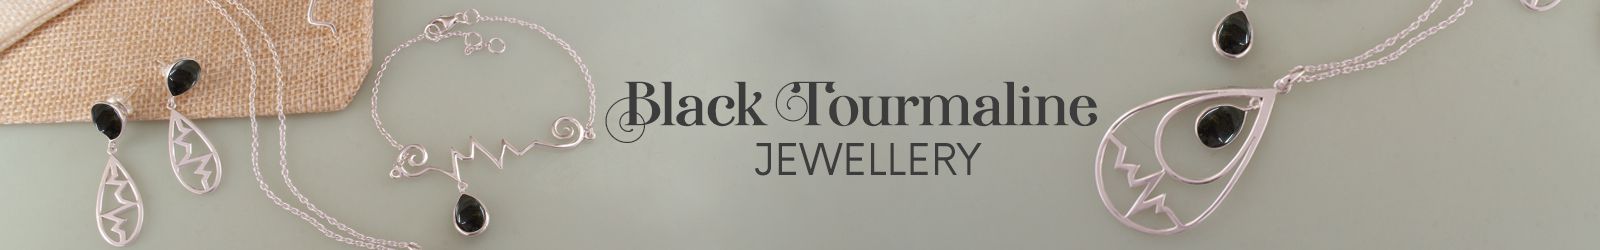 Silver Black Tourmaline Jewelry Wholesale Supplier